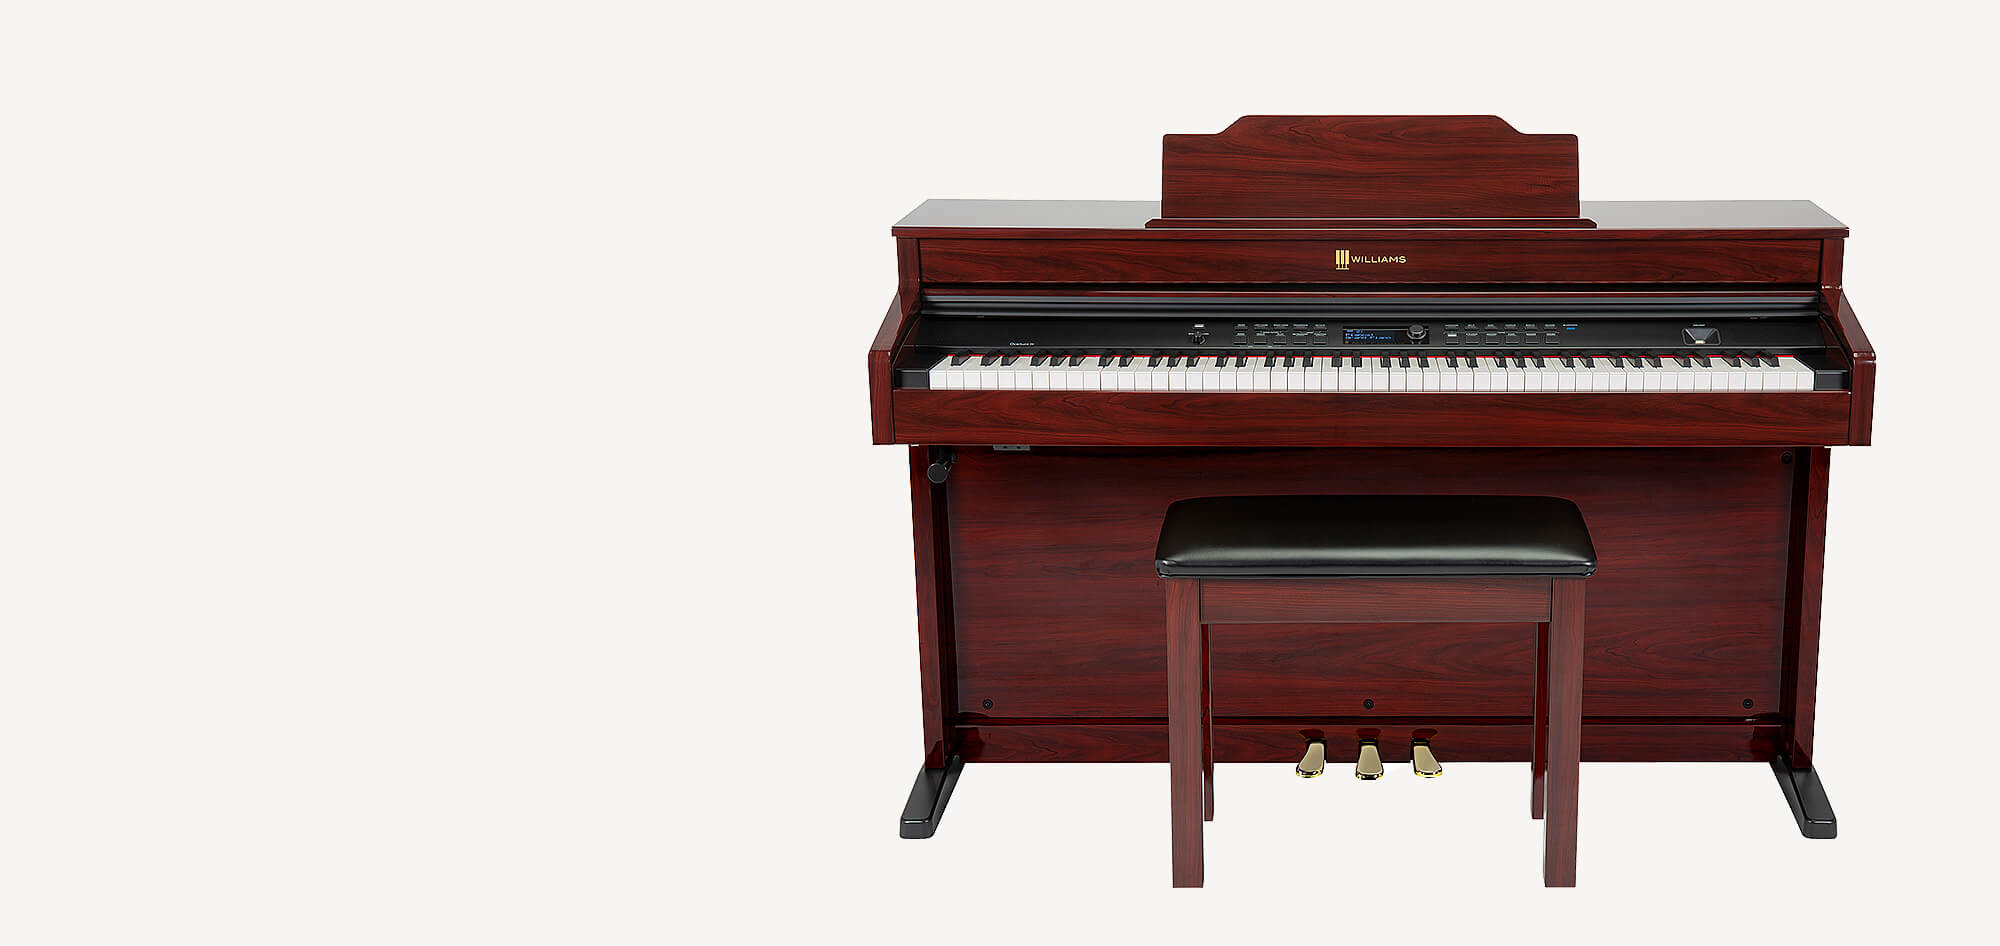 Williams Overture III digital console piano red.